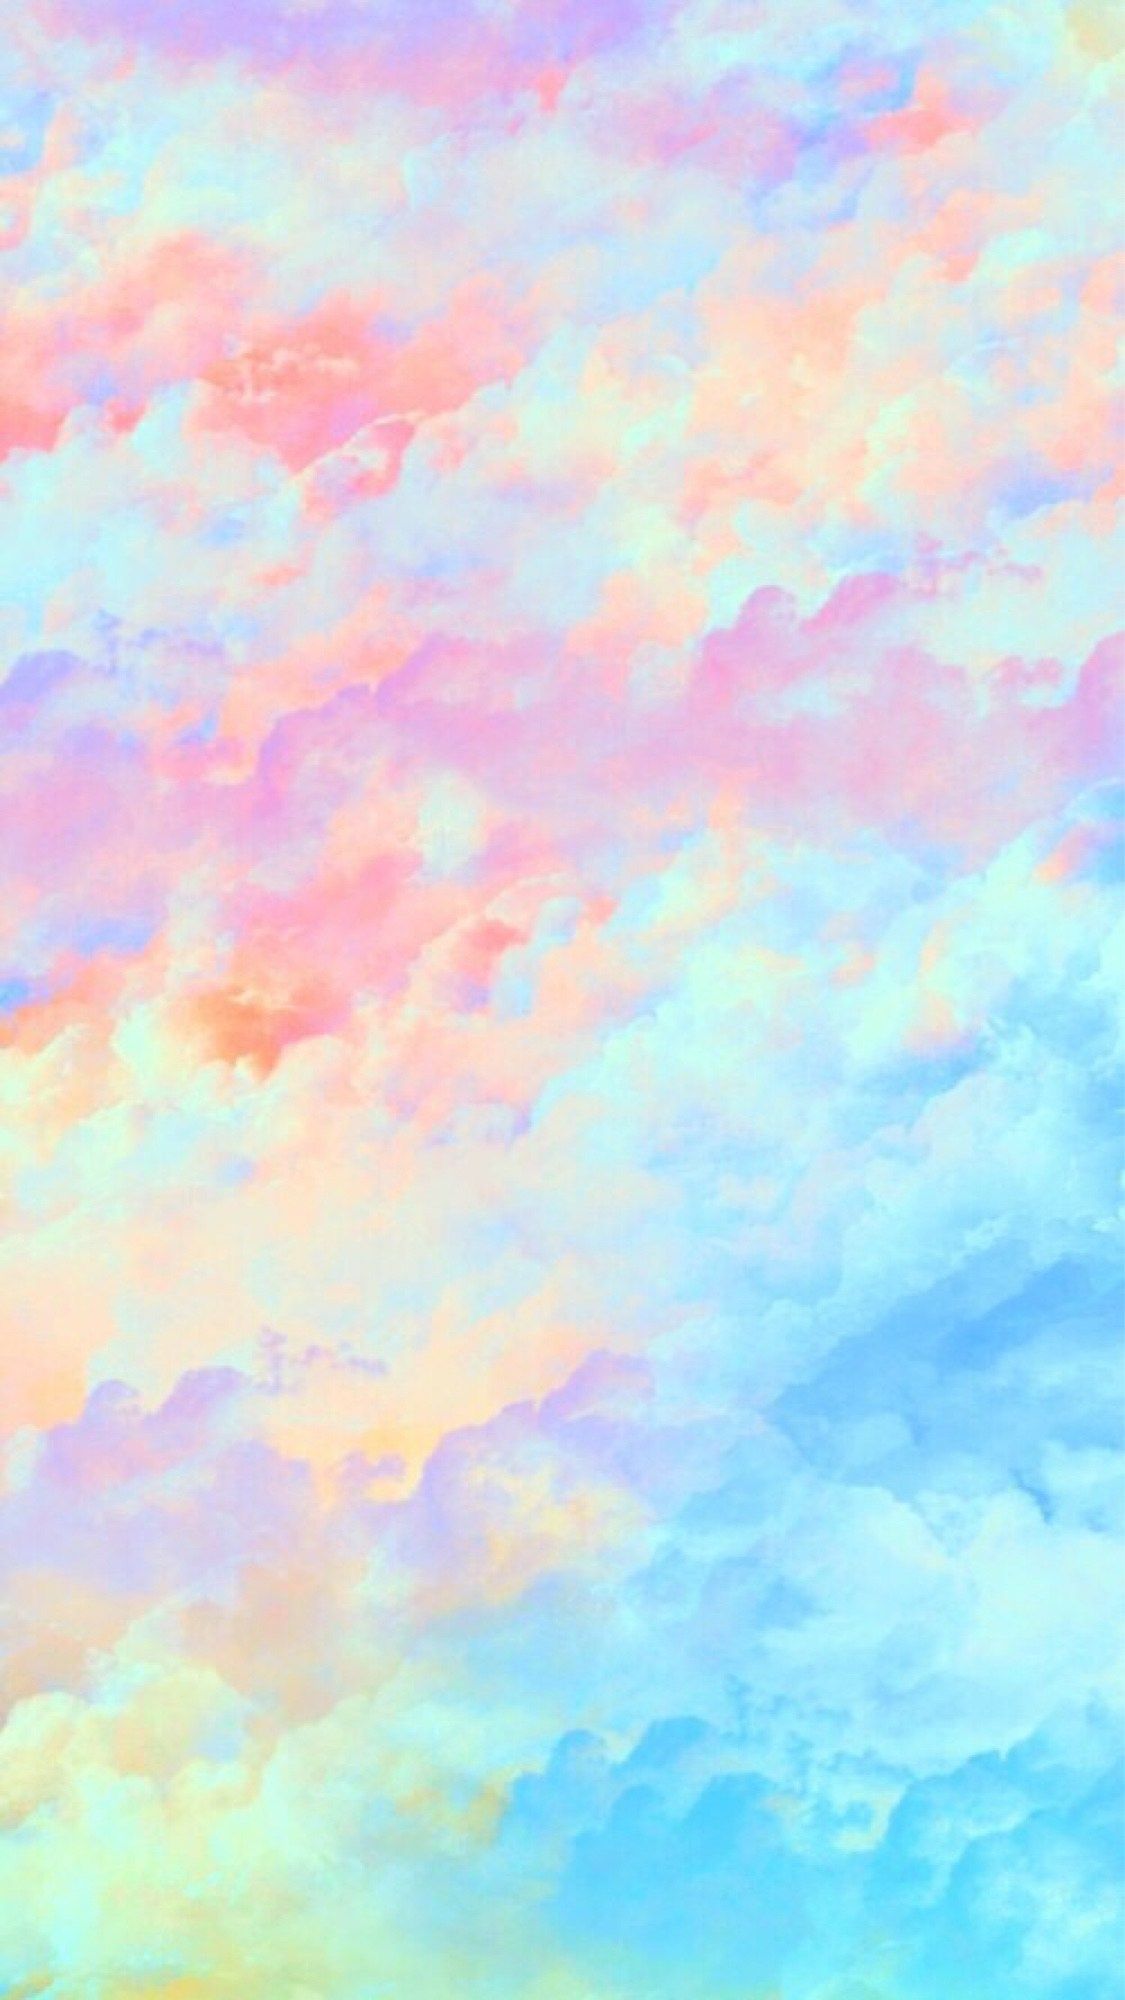 Sky, Blue, Daytime, Cloud, Pink, Aqua. iPhone wallpaper sky, Art wallpaper, Cute patterns wallpaper